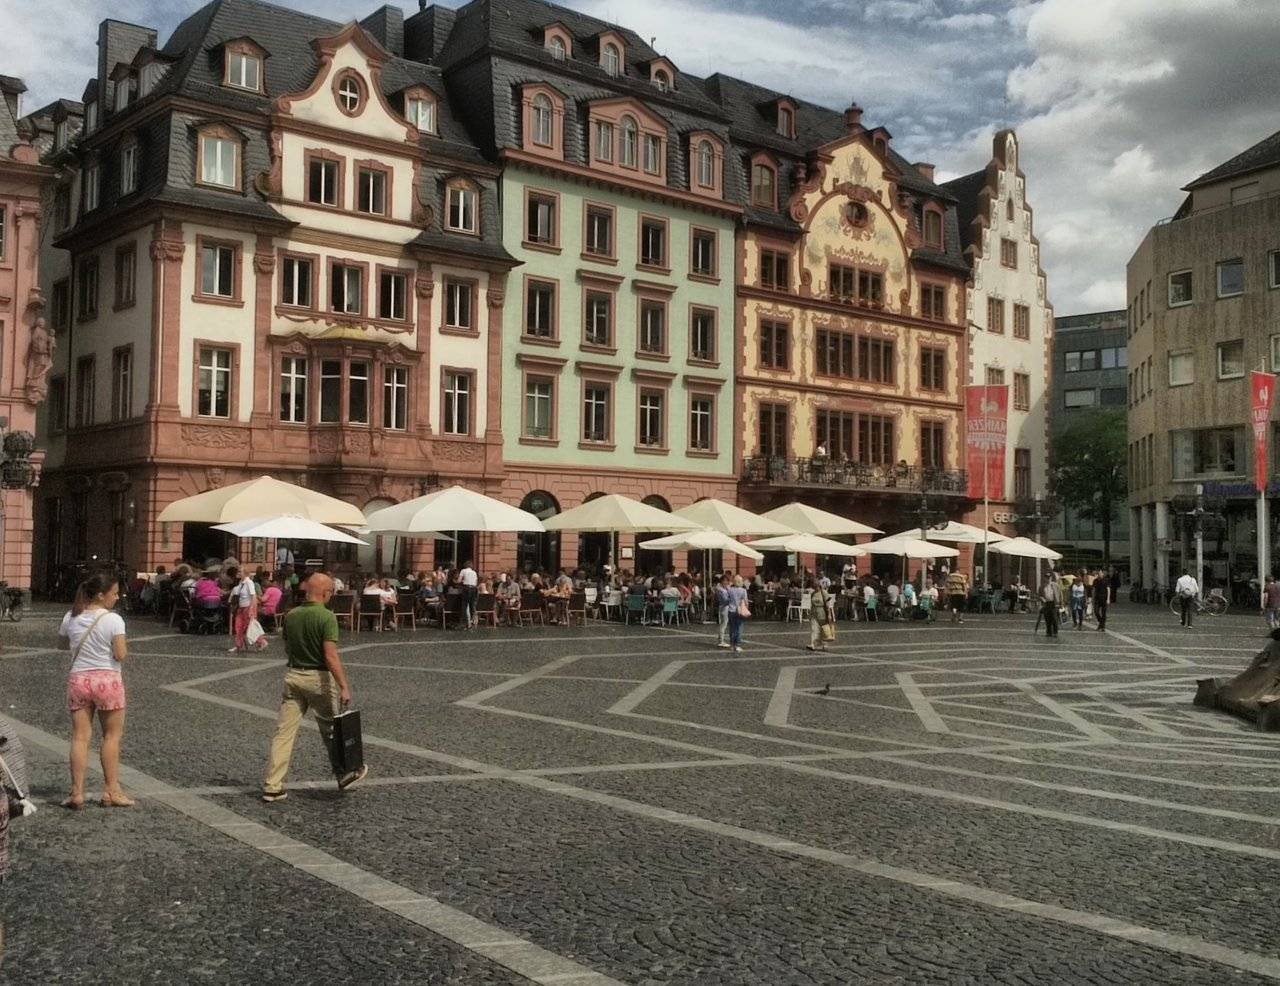 Marktplatz "Market square", the location for weekly markets